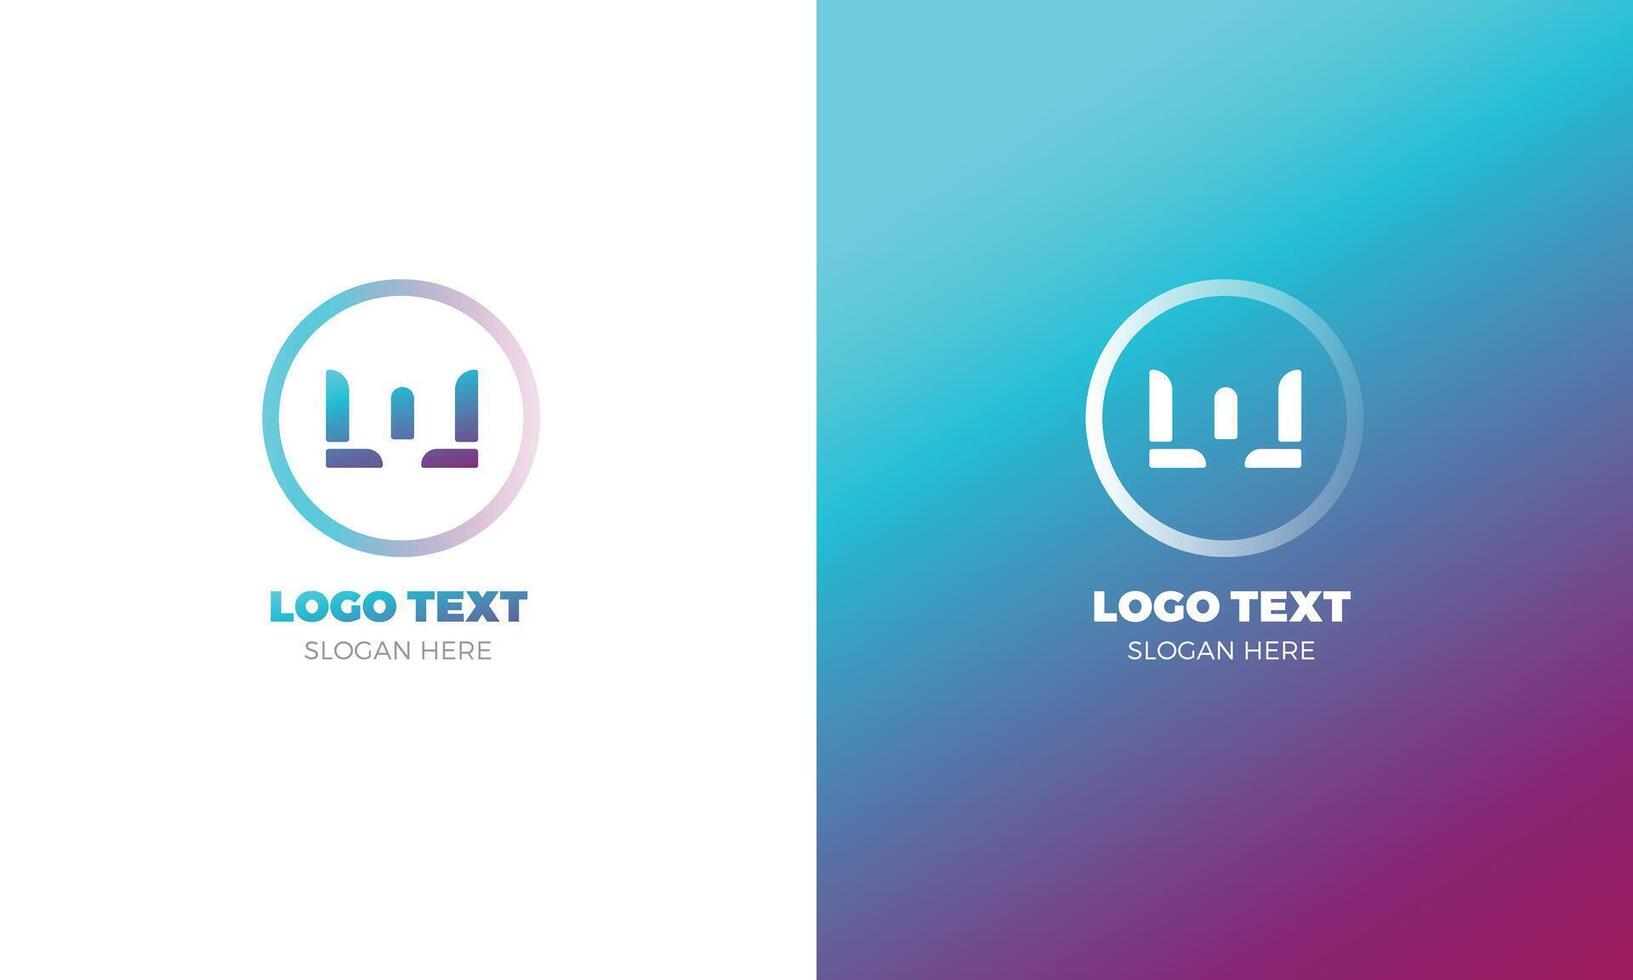 o negócio branding identidade corporativo vetor logotipo carta W Projeto